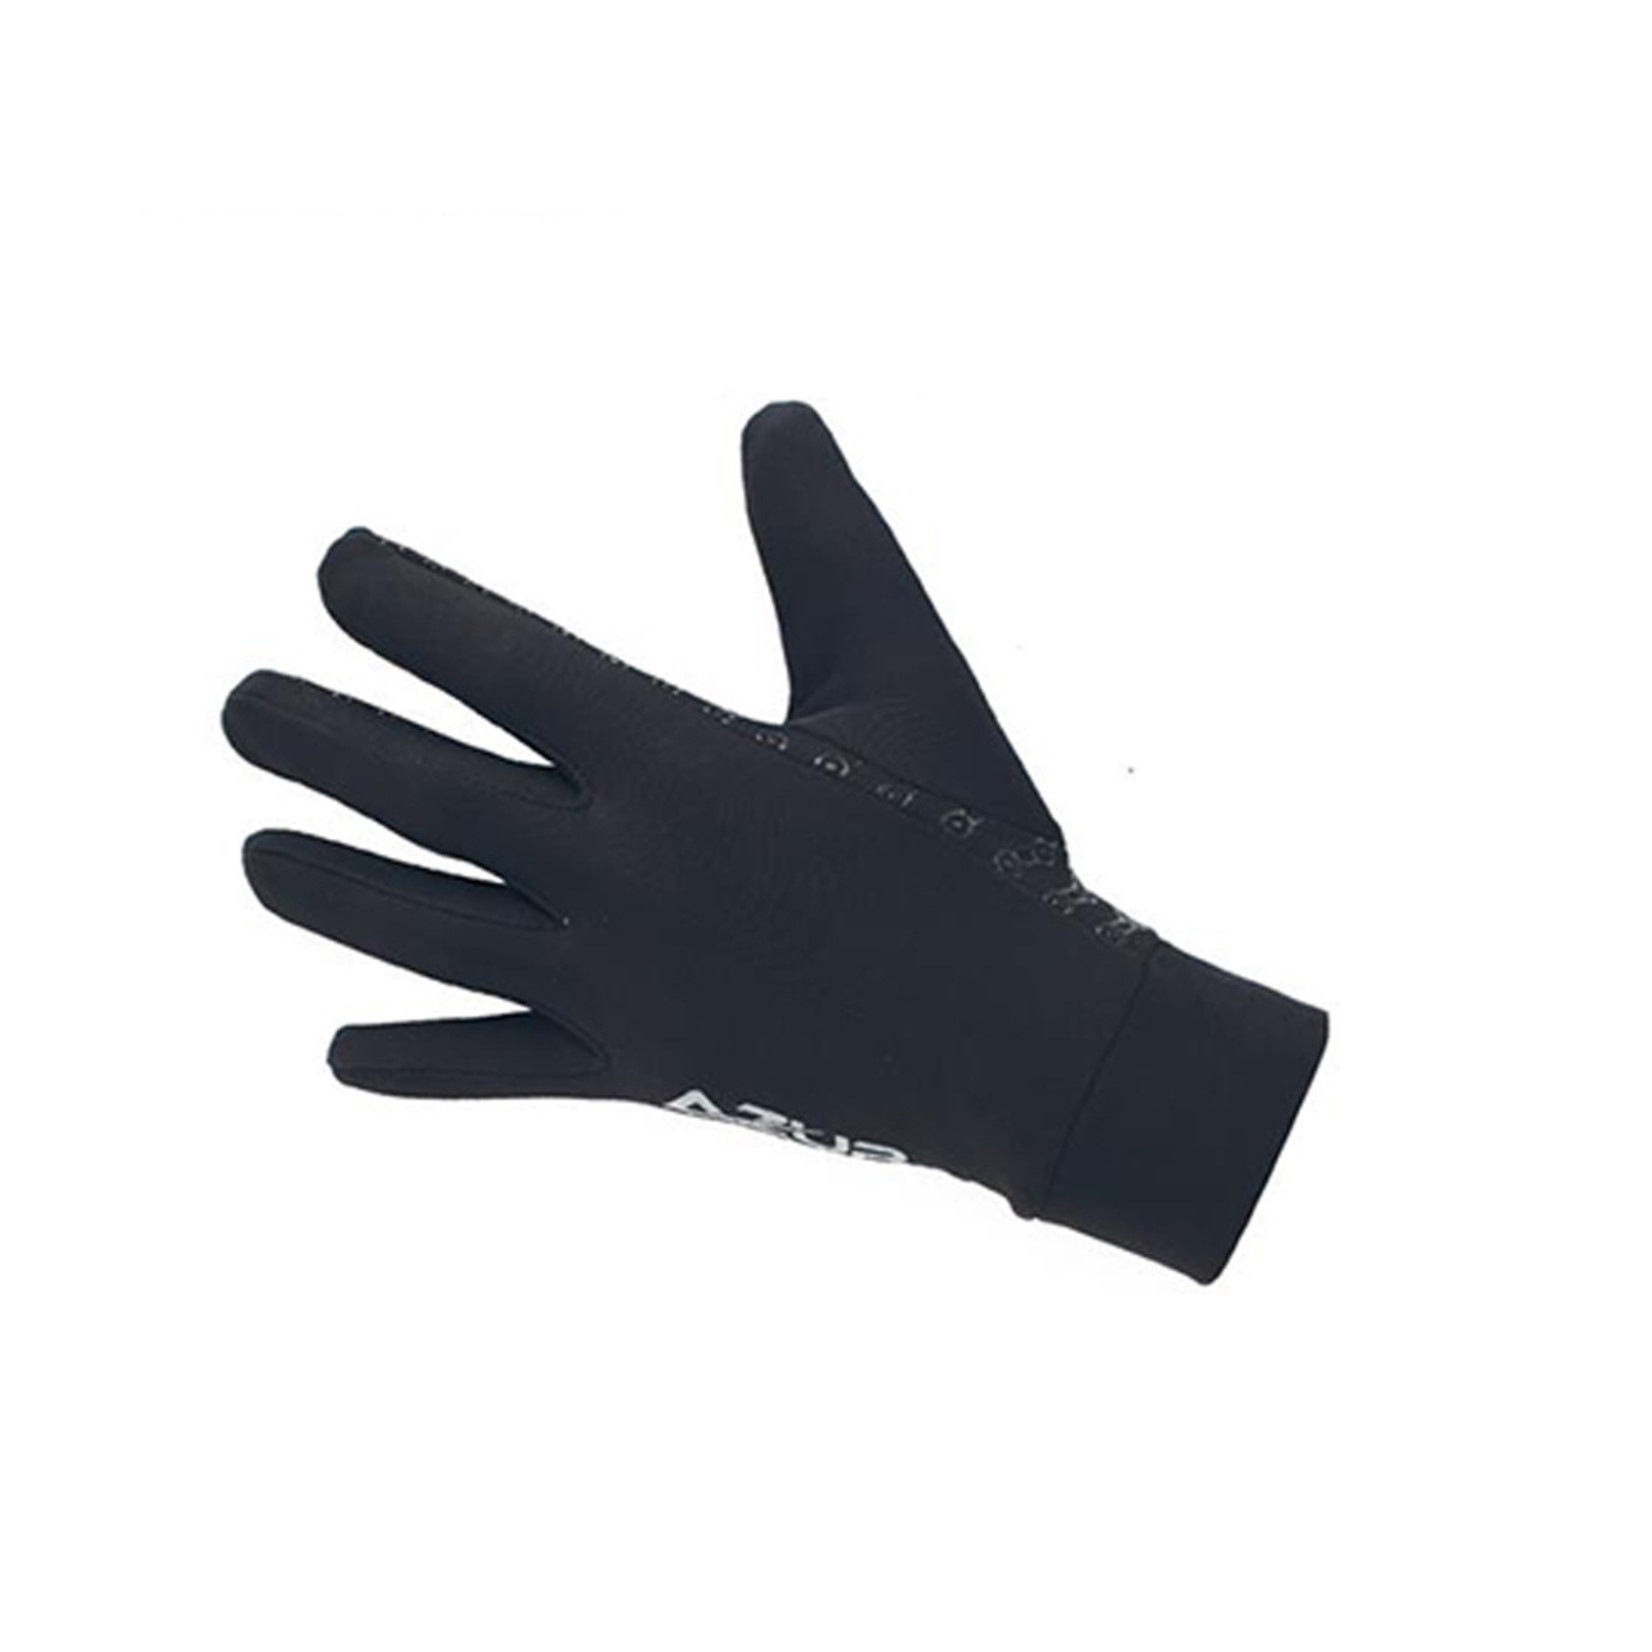 Azur Azur Bike/Cycling Glove - Reflective Silicone Palm - L10 Series - Black - Small